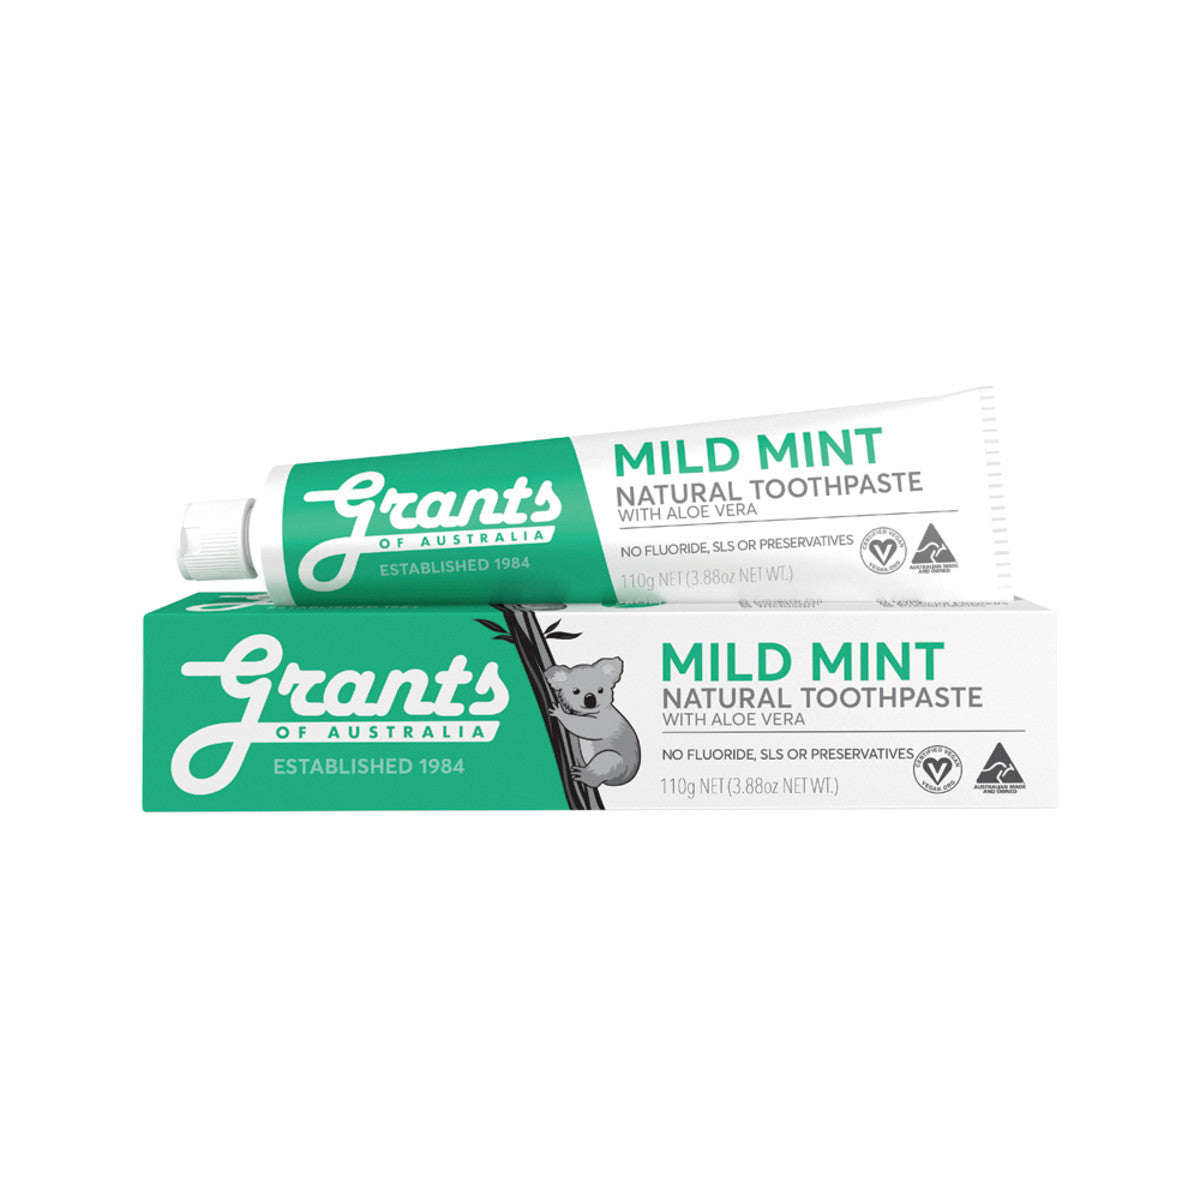 Grants - Natural Toothpaste (Mild Mint with Aloe Vera)